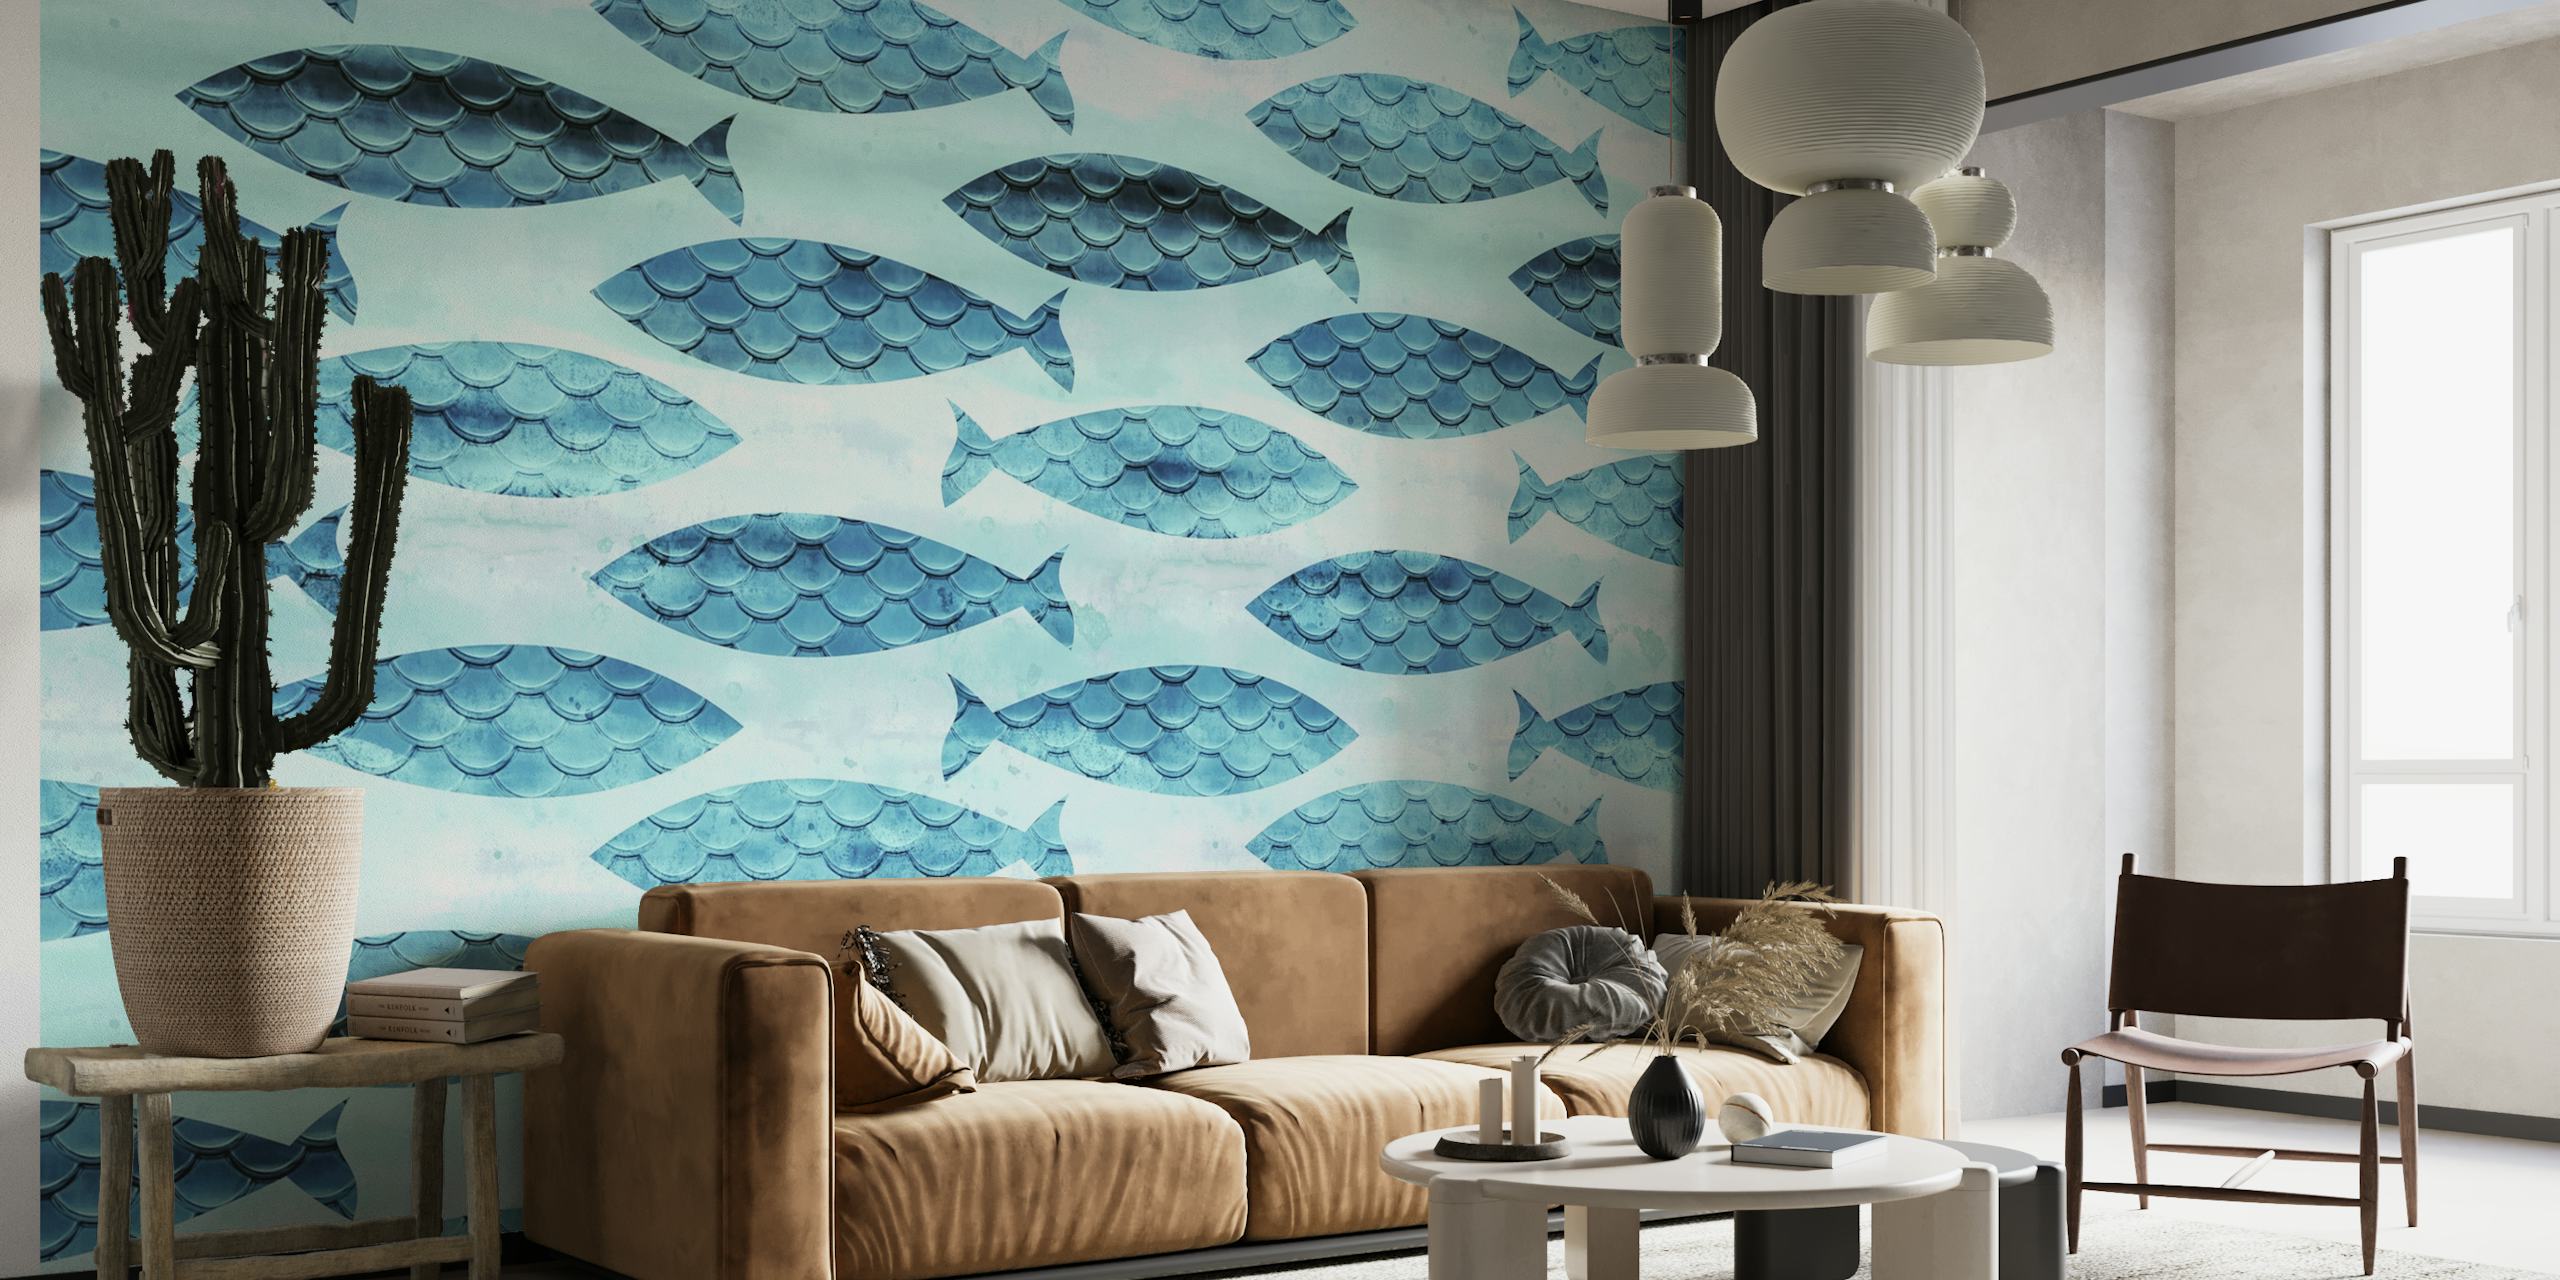 Veggmaleri i turkis og hvit fisk med mønster for interiør